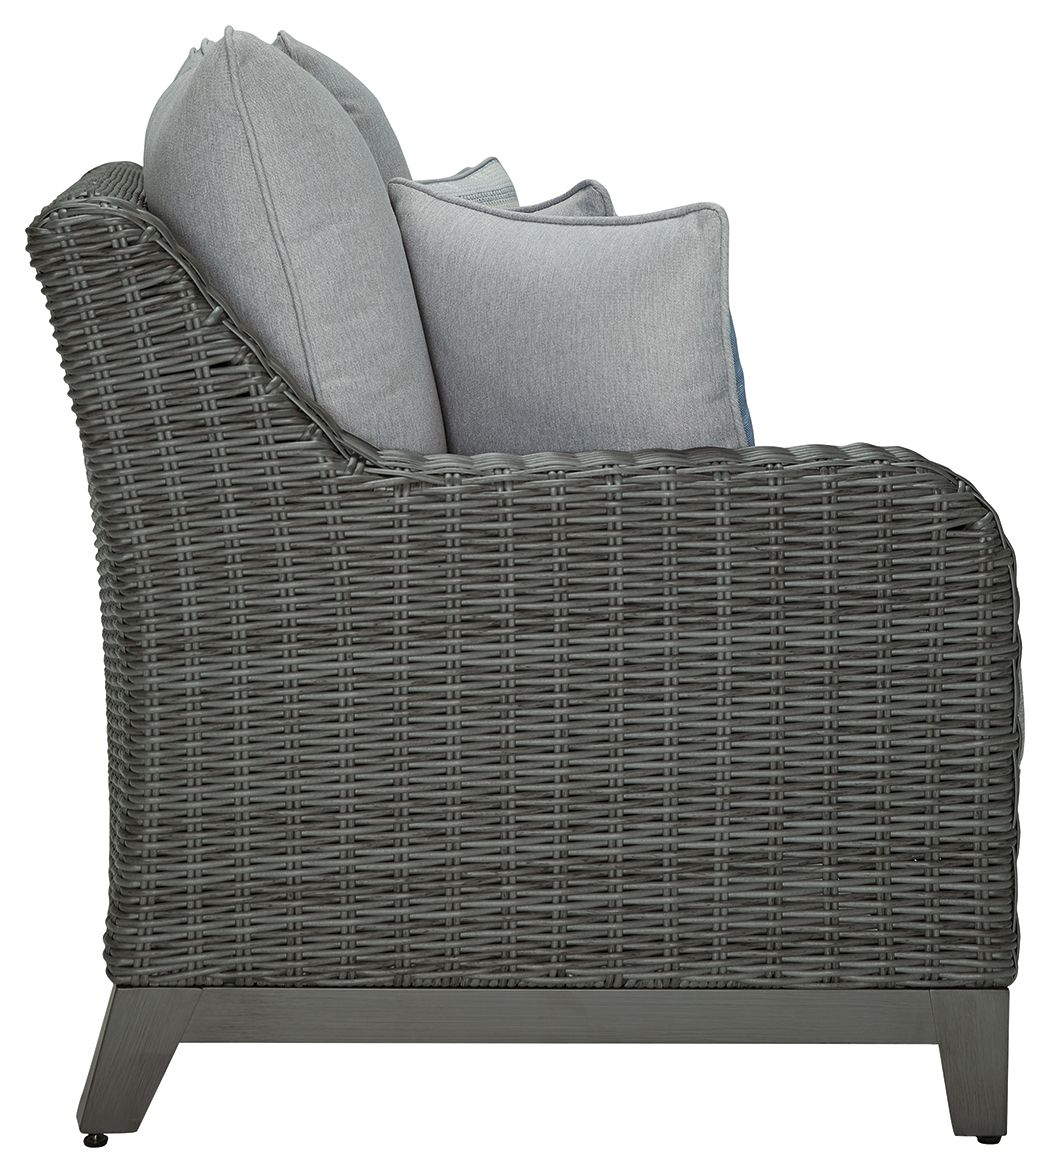 Elite Park - Gray - Sofa With Cushion